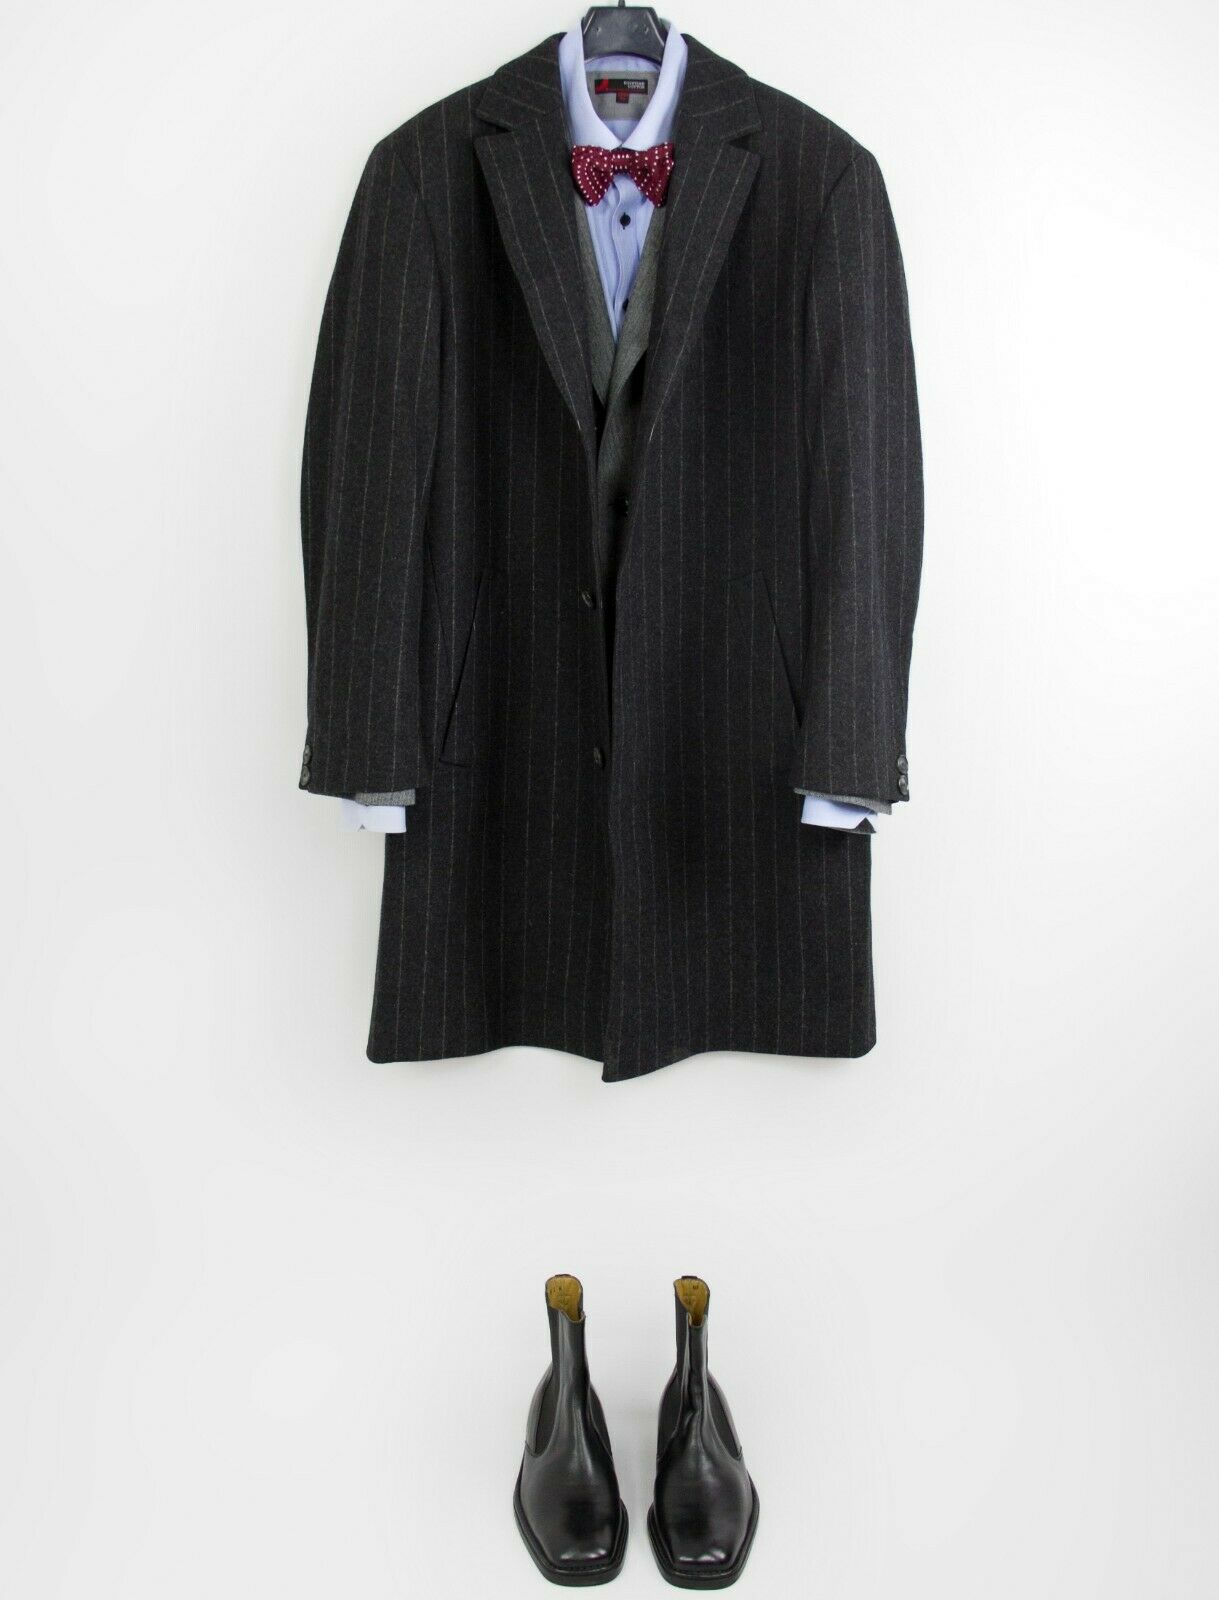 HUGO BOSS Wool Gray Striped Top Coat SIZE US 44